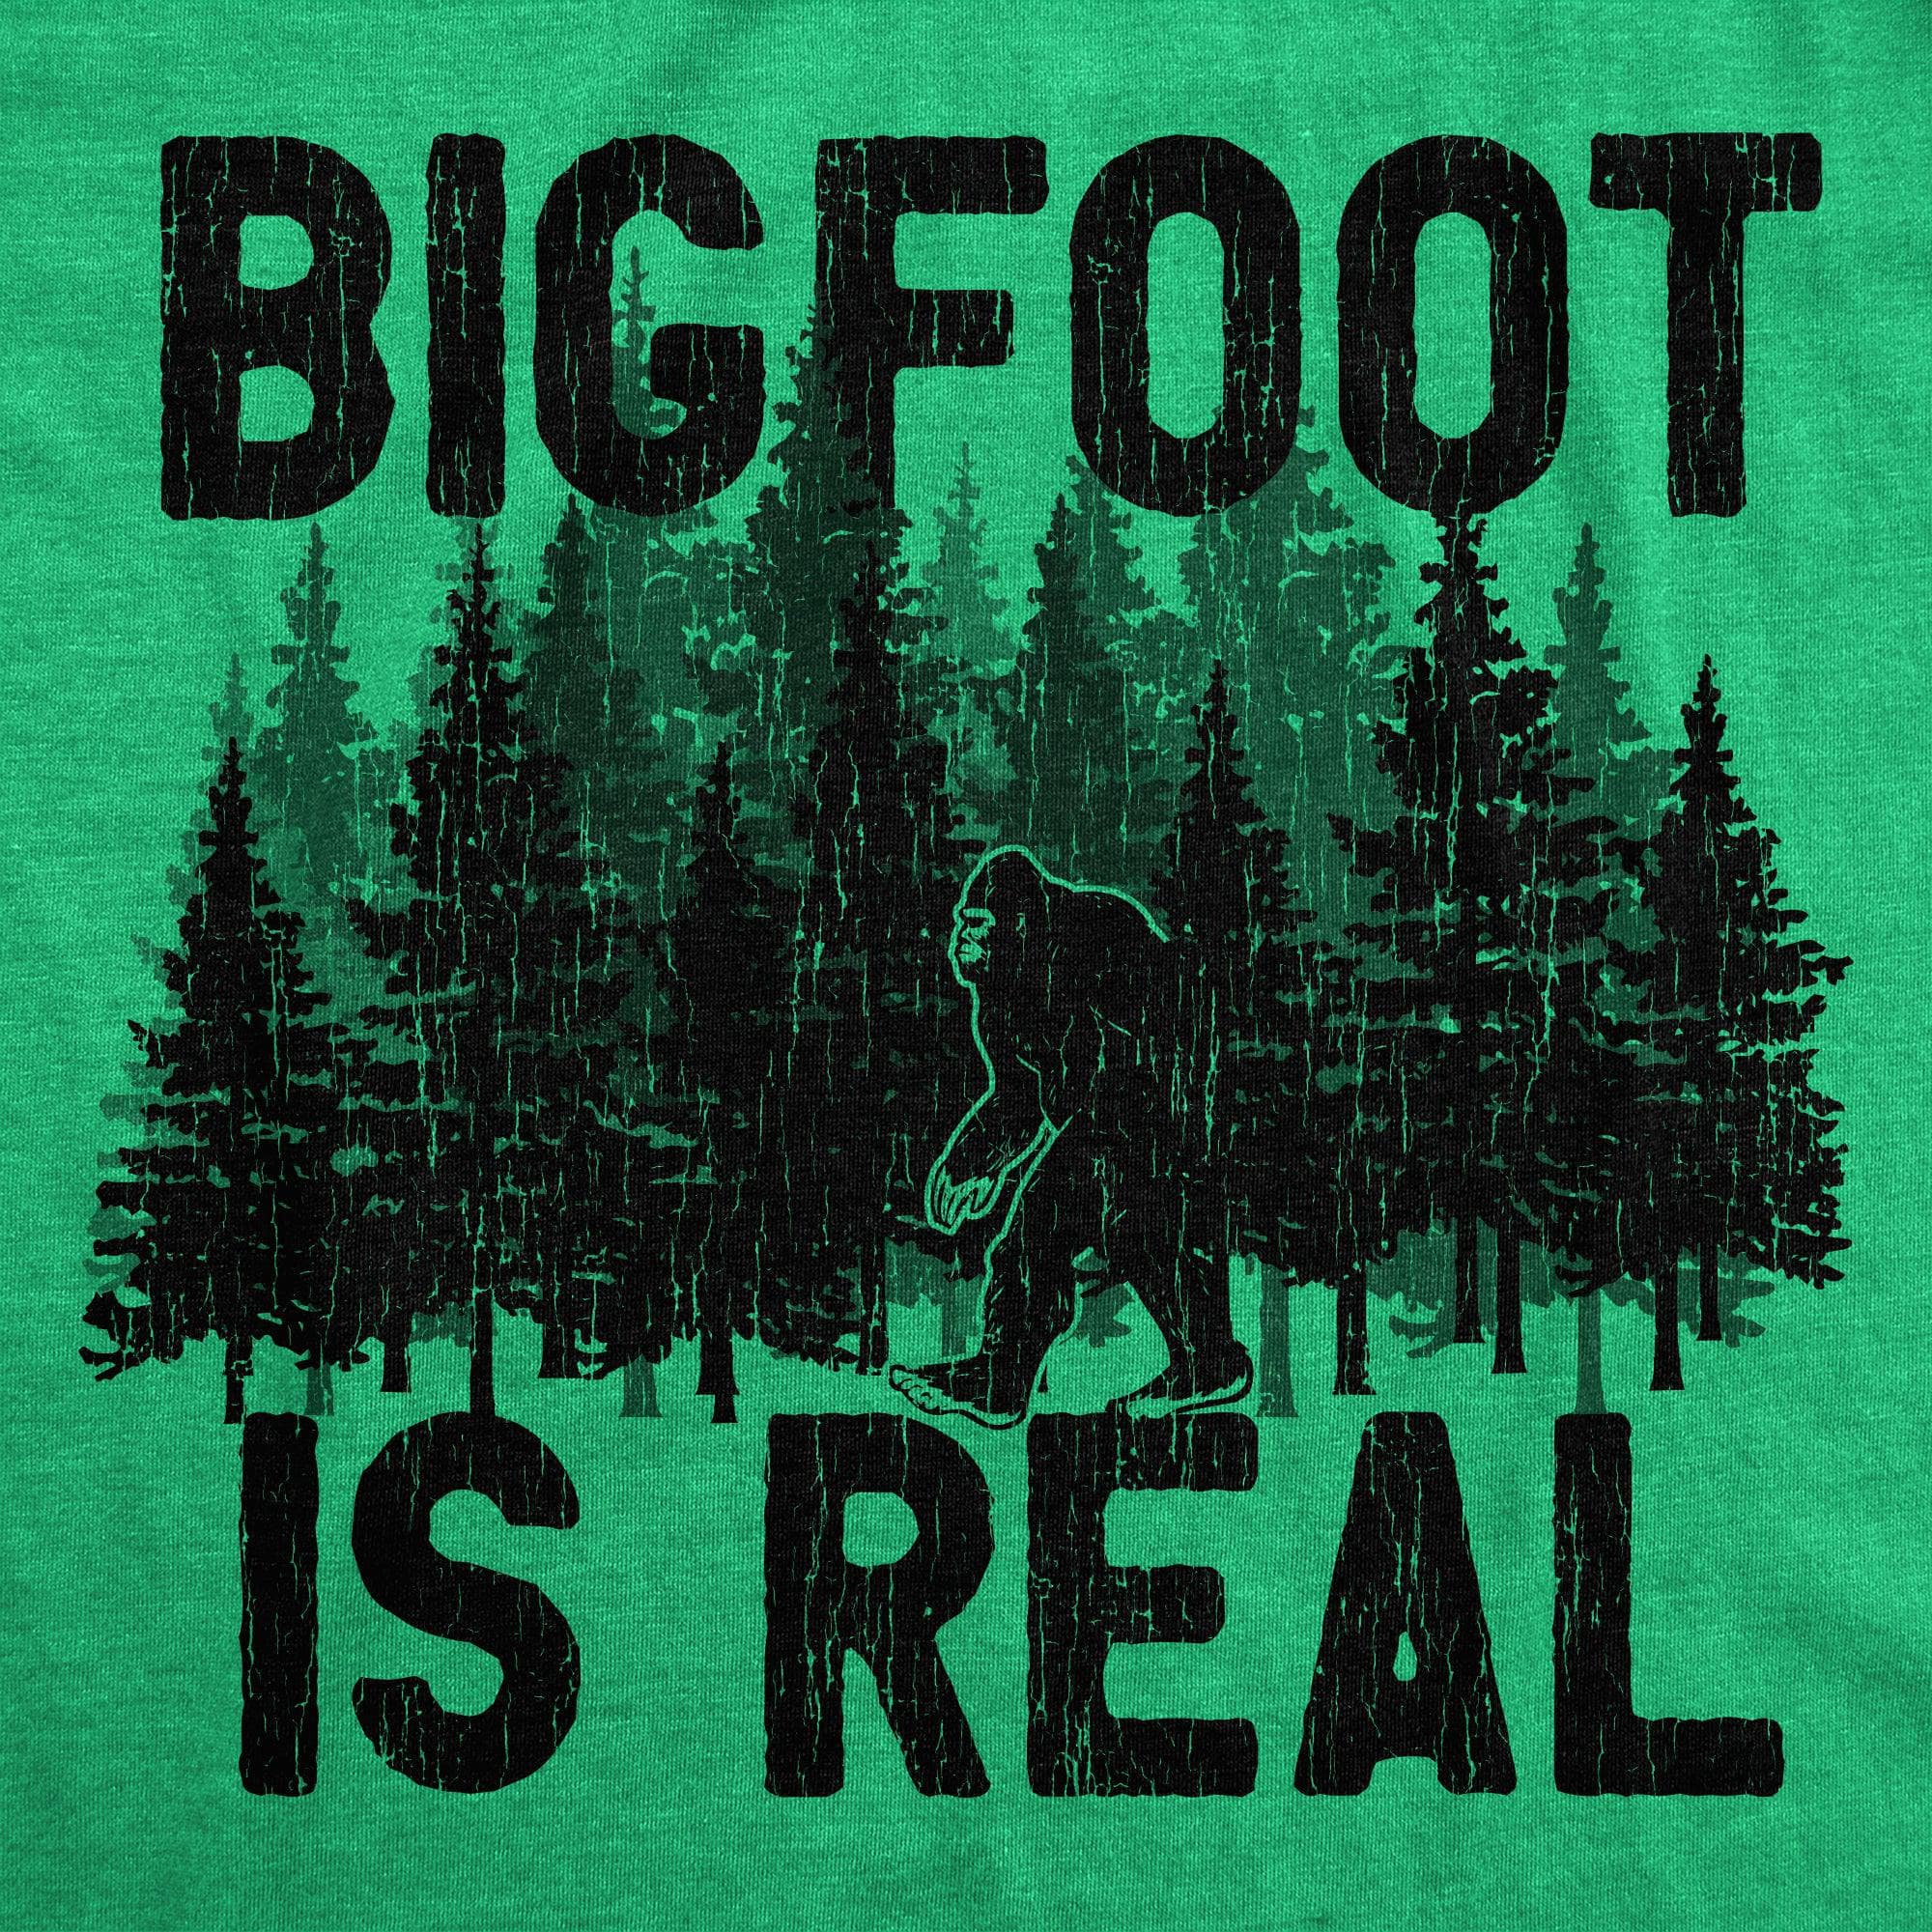 Bigfoot Is Real Men's Tshirt  -  Crazy Dog T-Shirts